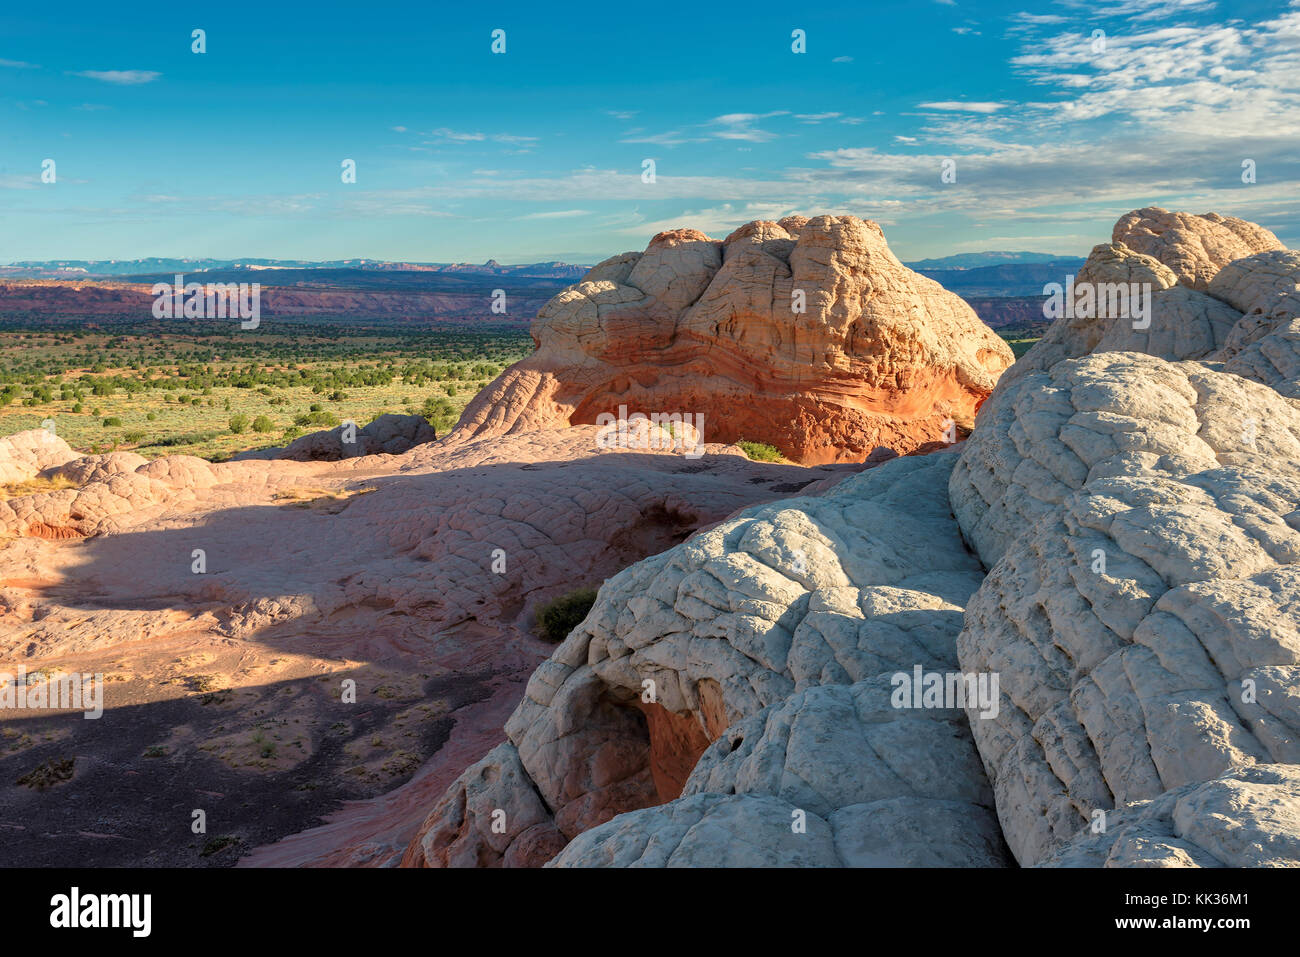 The White Pocket in Vermilion Cliffs National Monument, Arizona Stock Photo